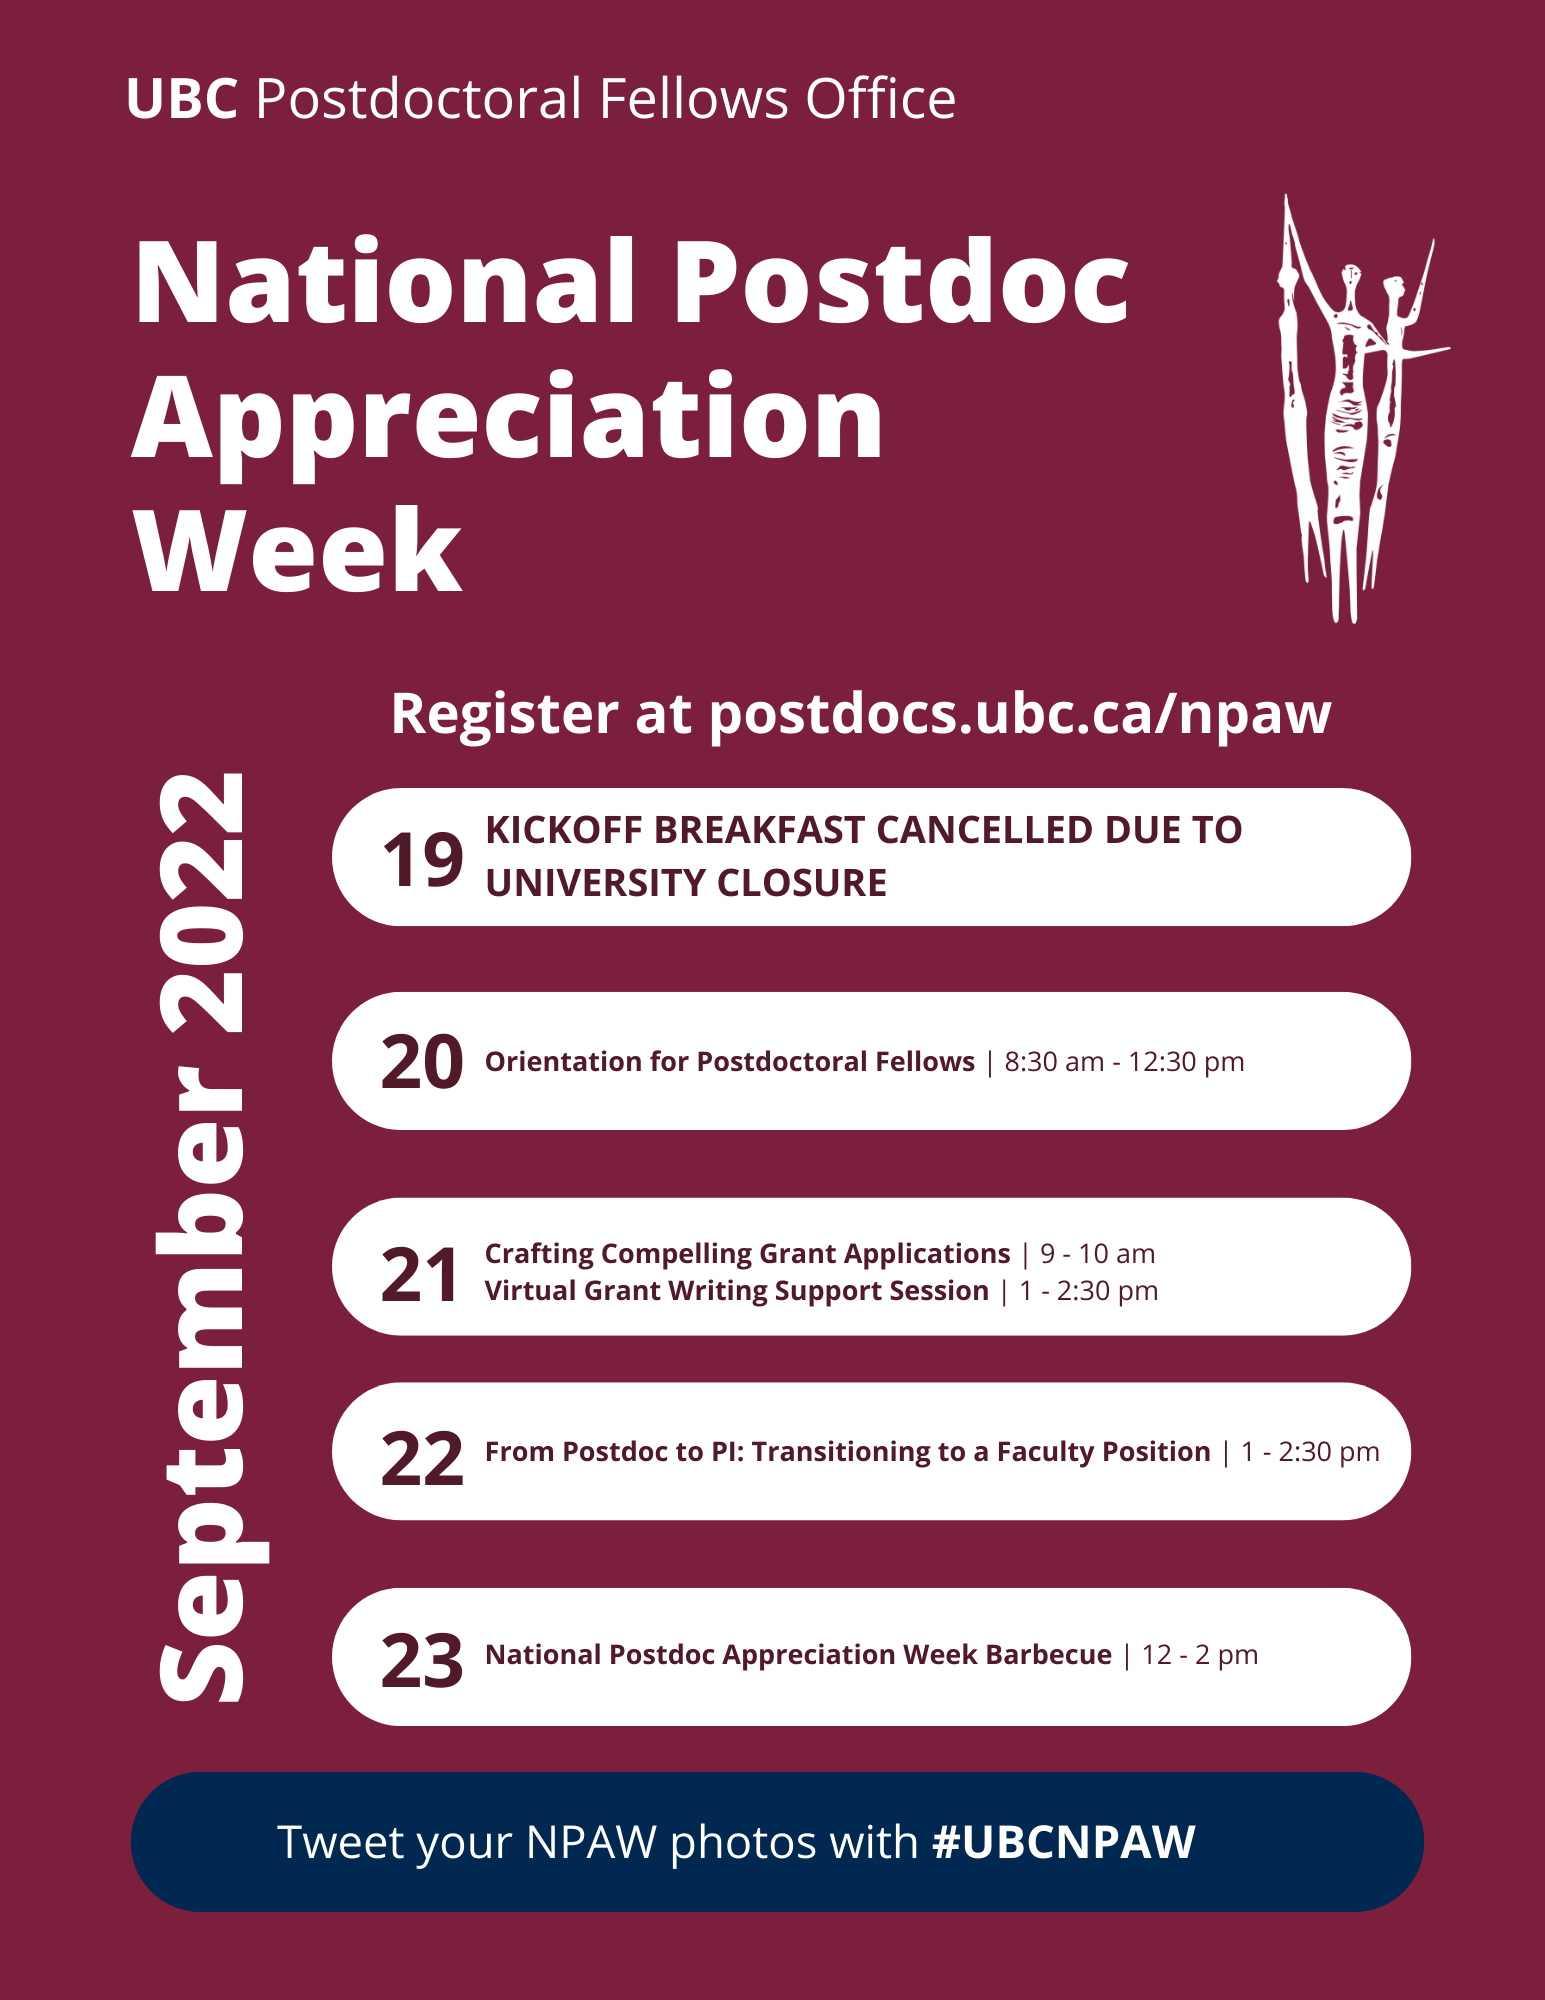 National Postdoc Appreciation Week Events Schedule